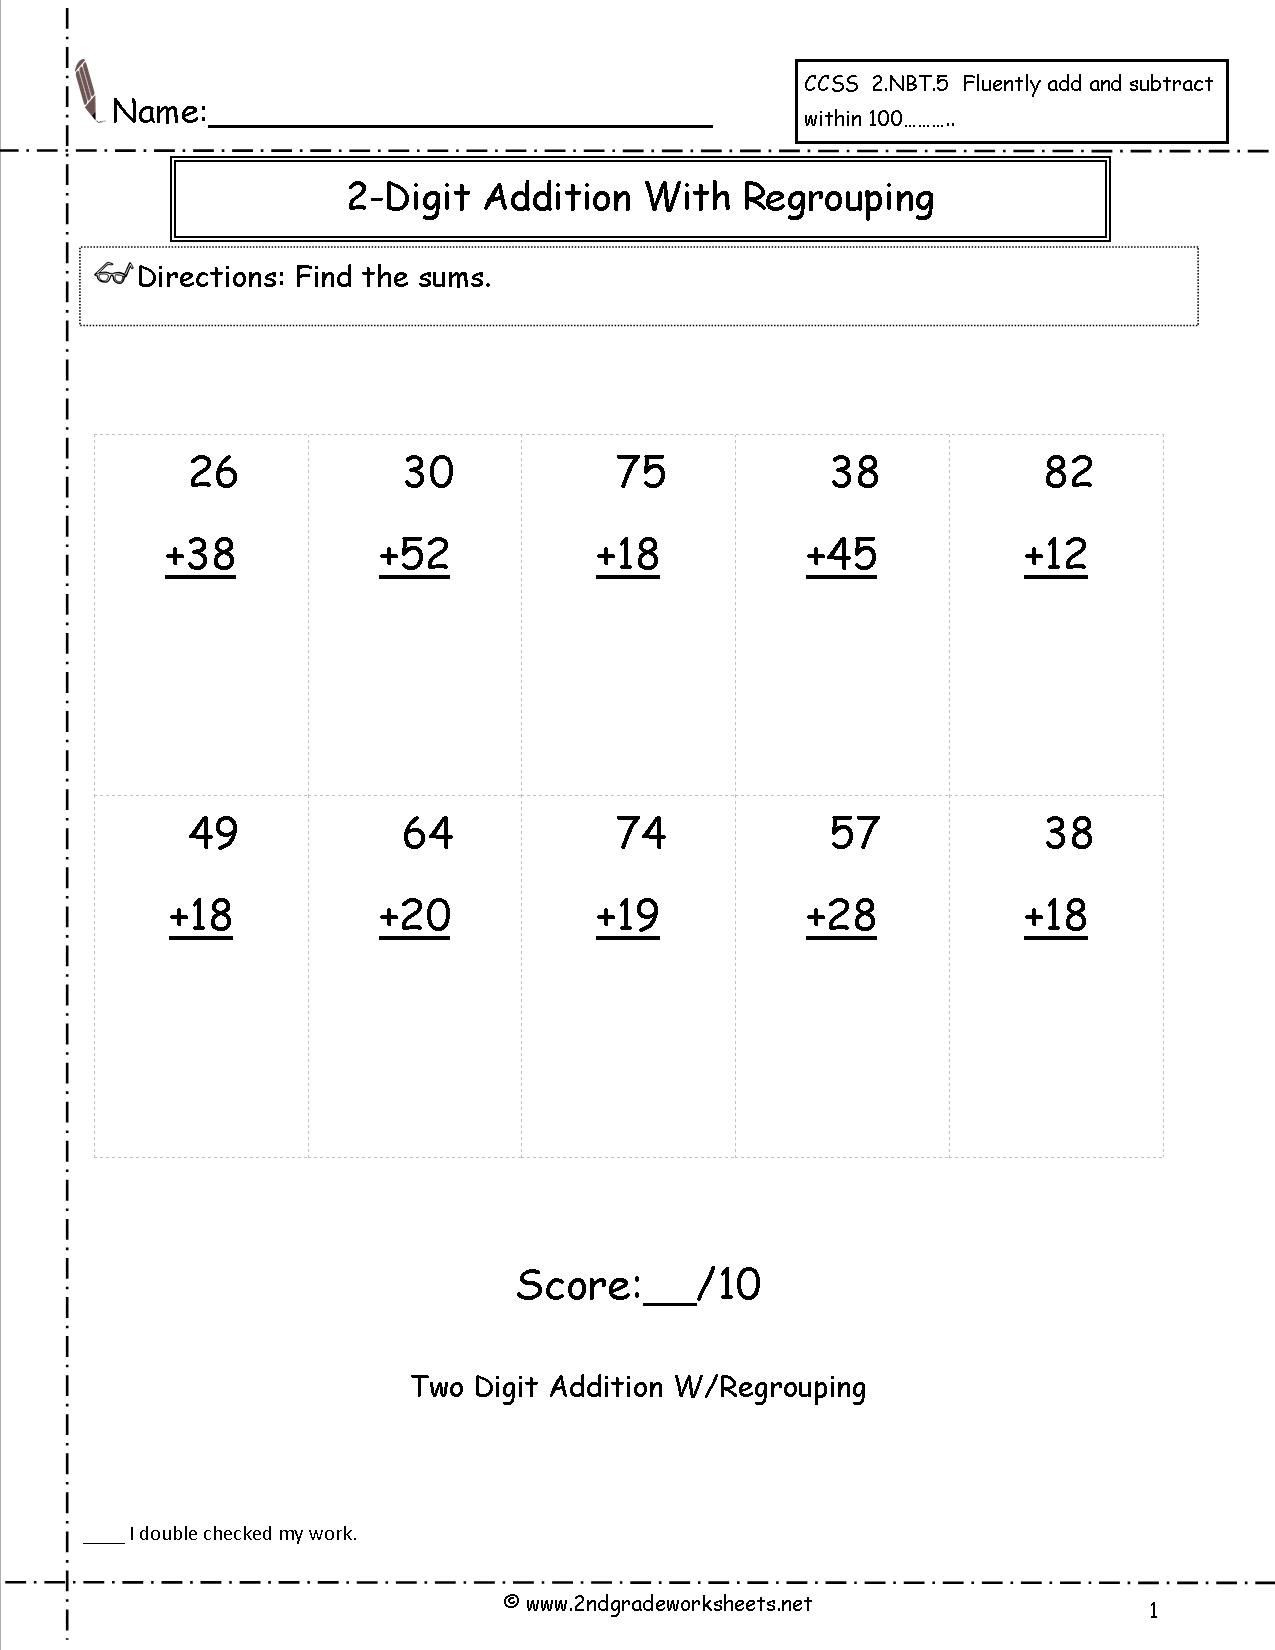 Free Math Worksheets Second Grade 2 Addition Adding 2 Digit Plus 1 Digit No Regroup